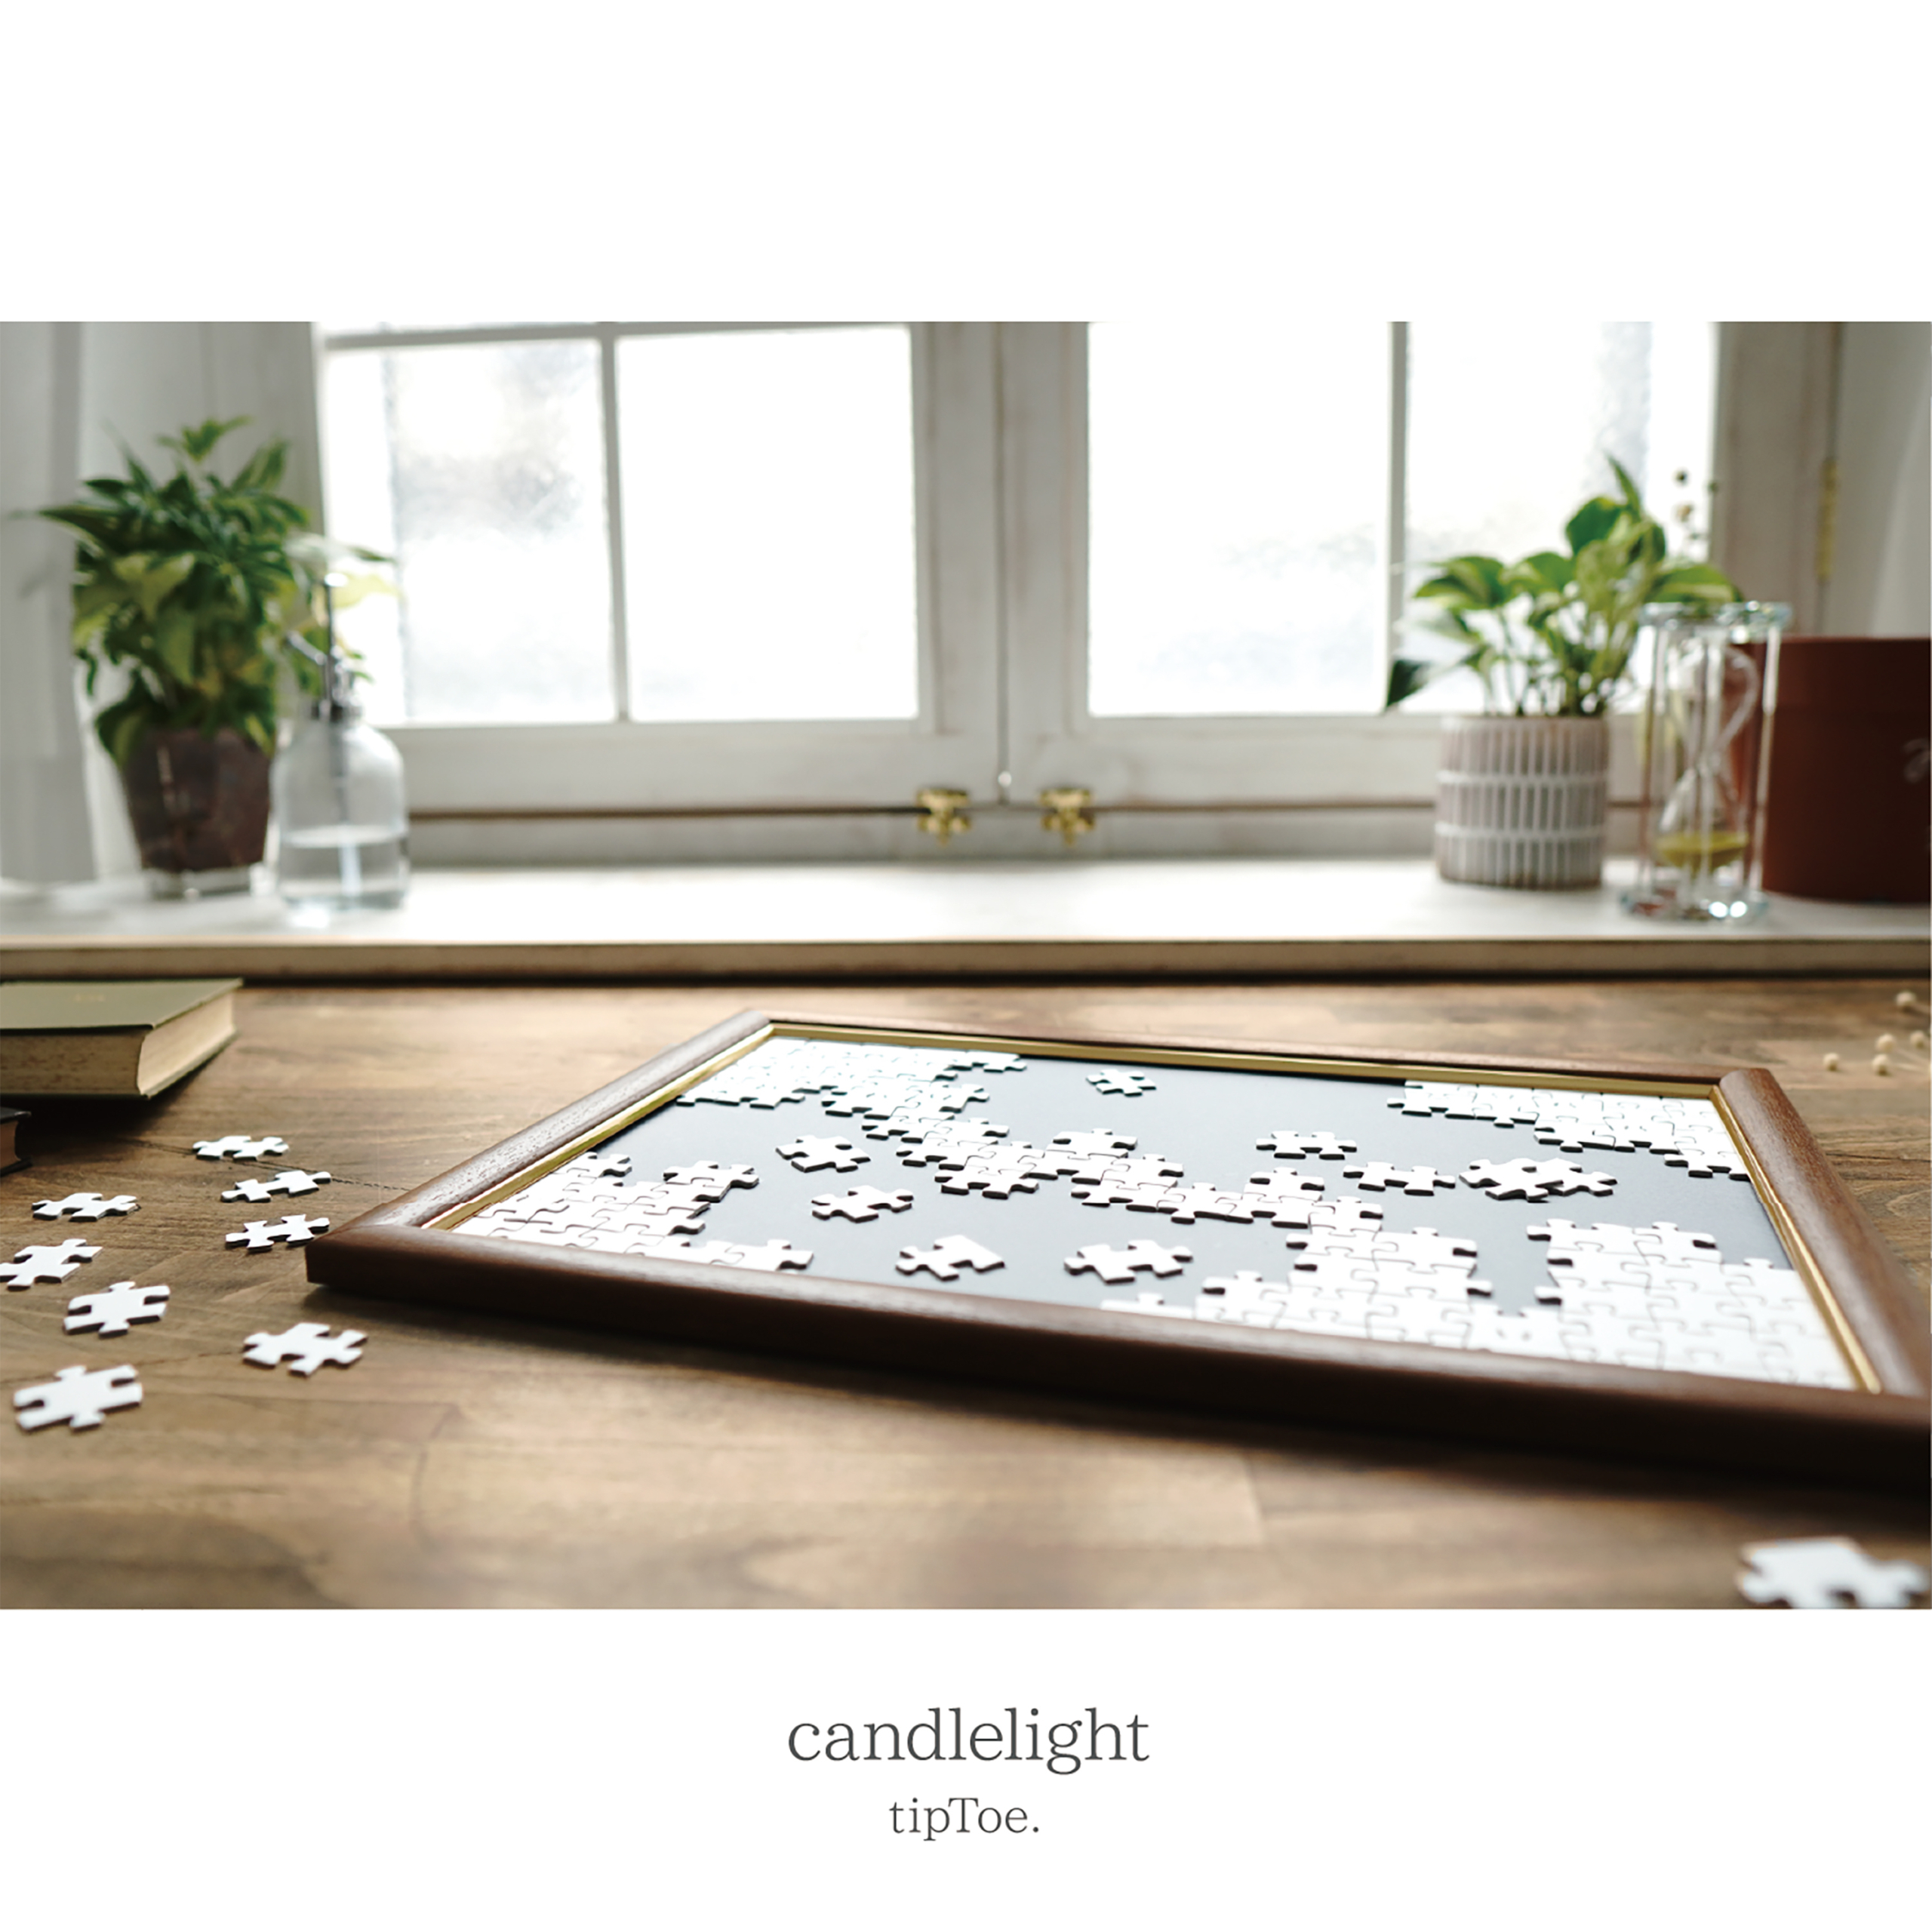 4th full album「candlelight」